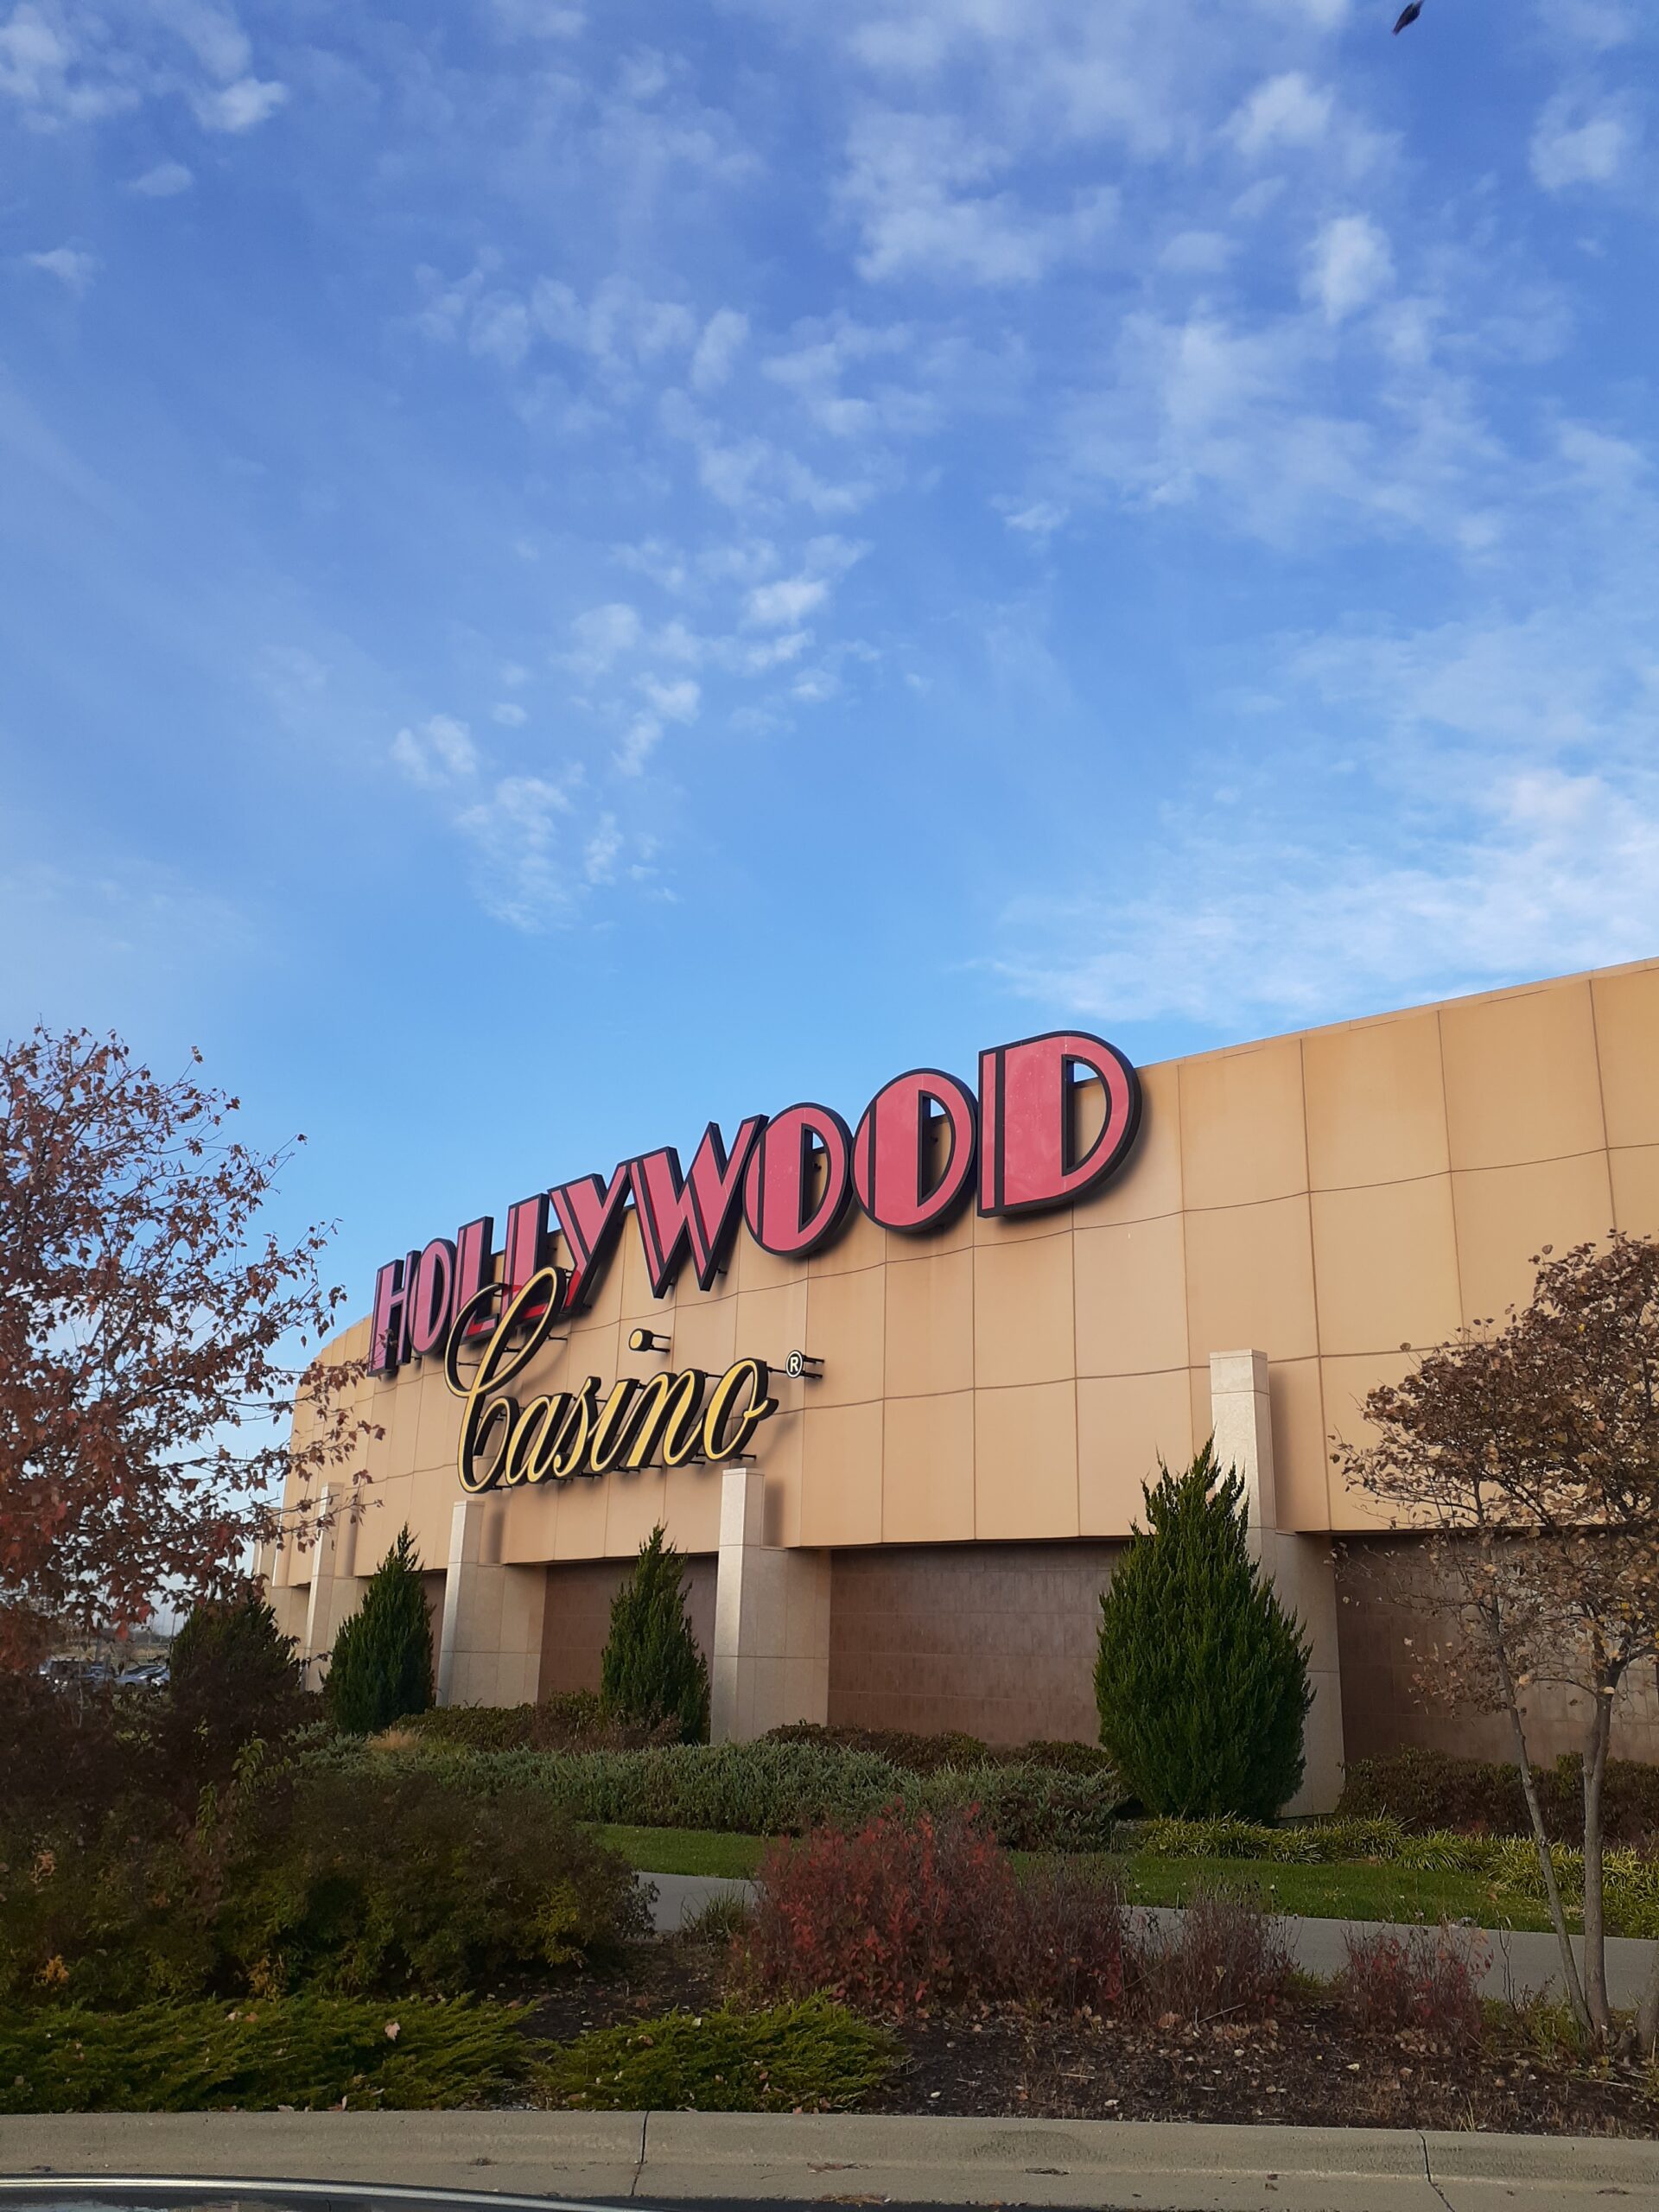 Hollywood Casino Kansas Sign - Square Bettor